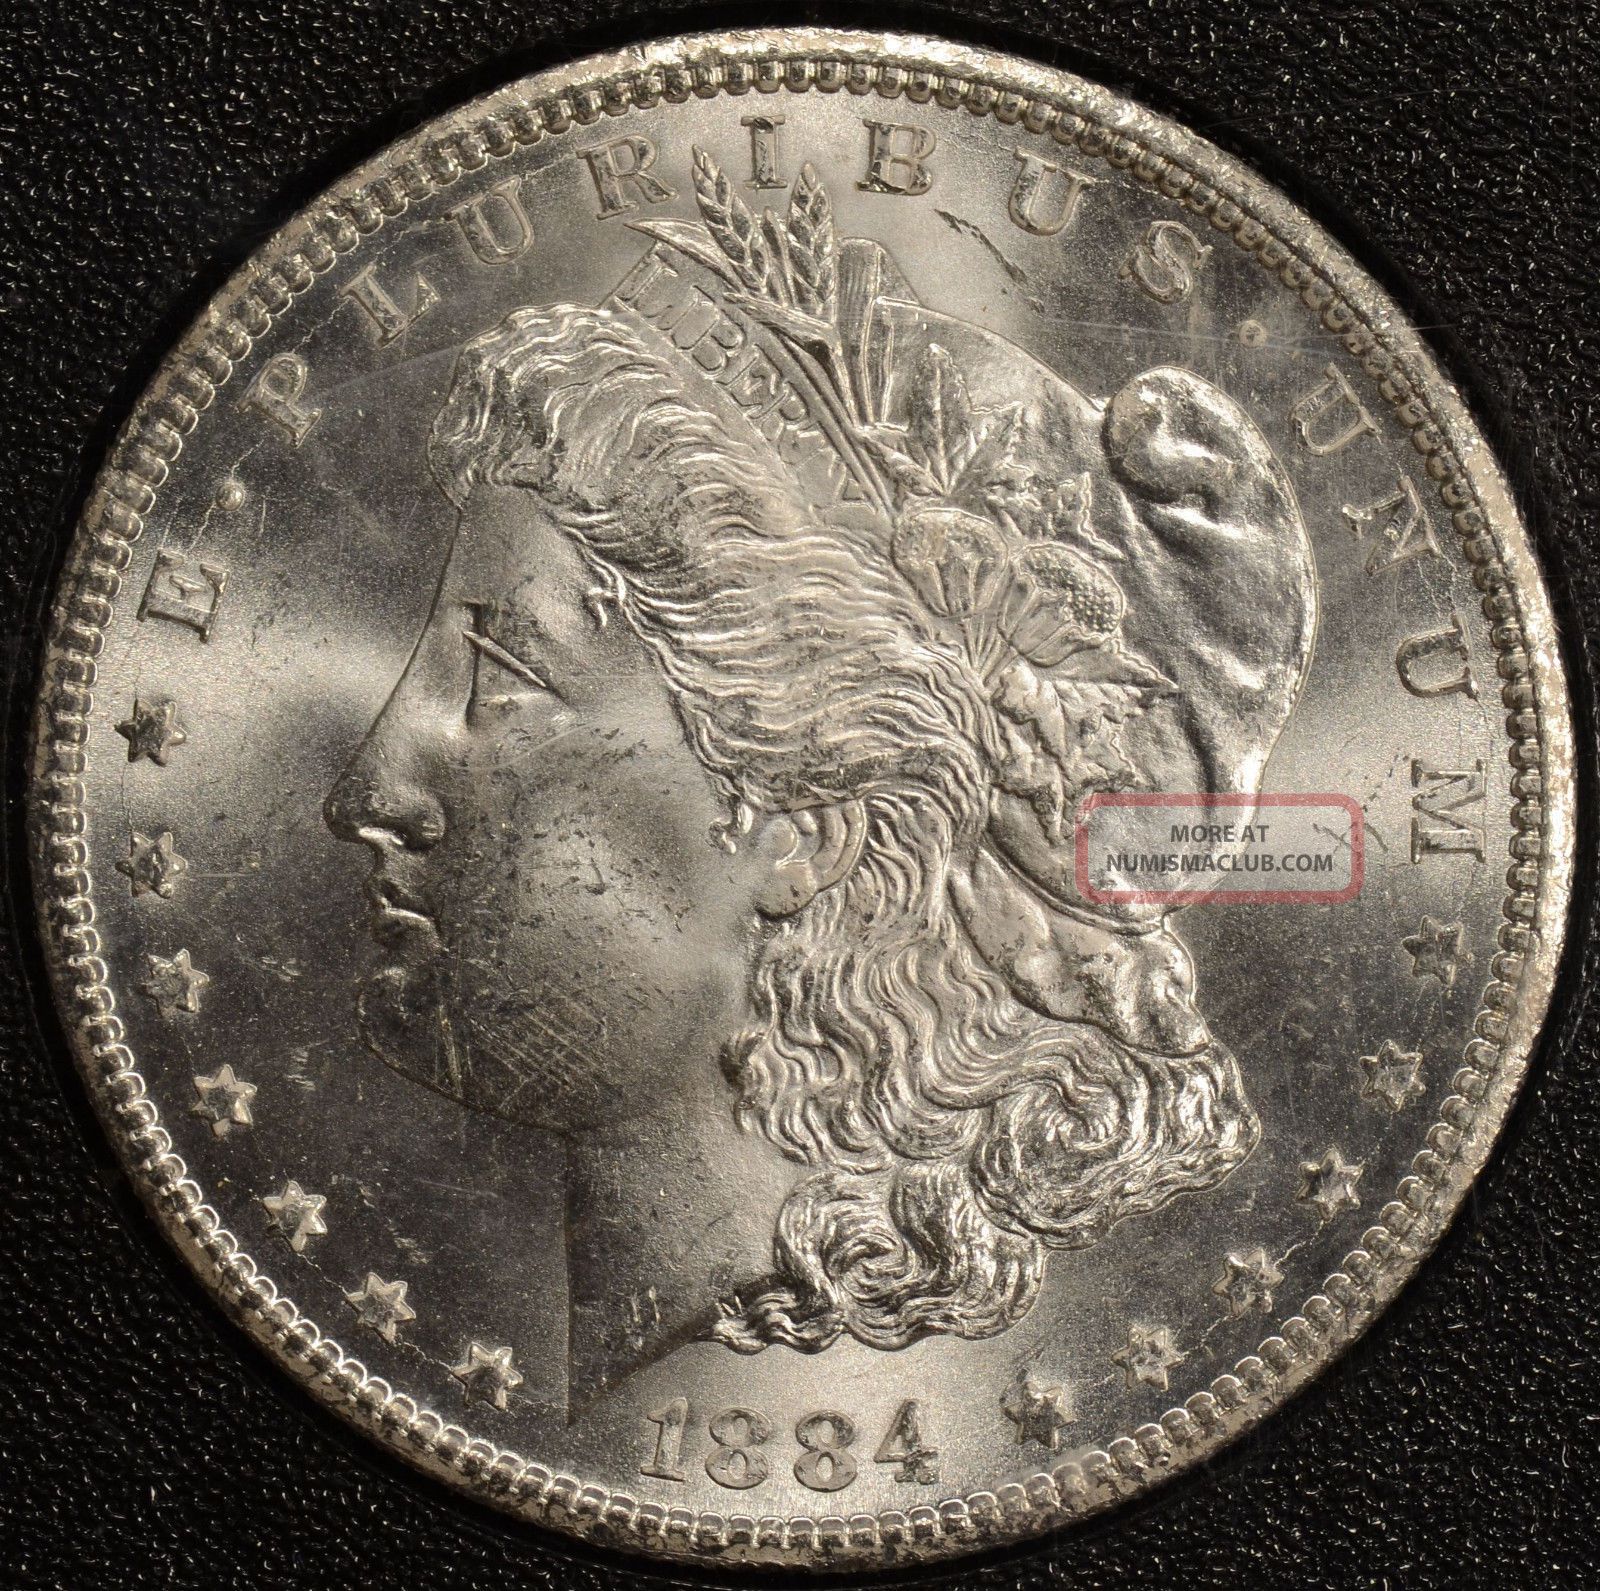 1884 - Cc $1 Gsa Hoard Morgan Silver Dollar Ngc Ms64